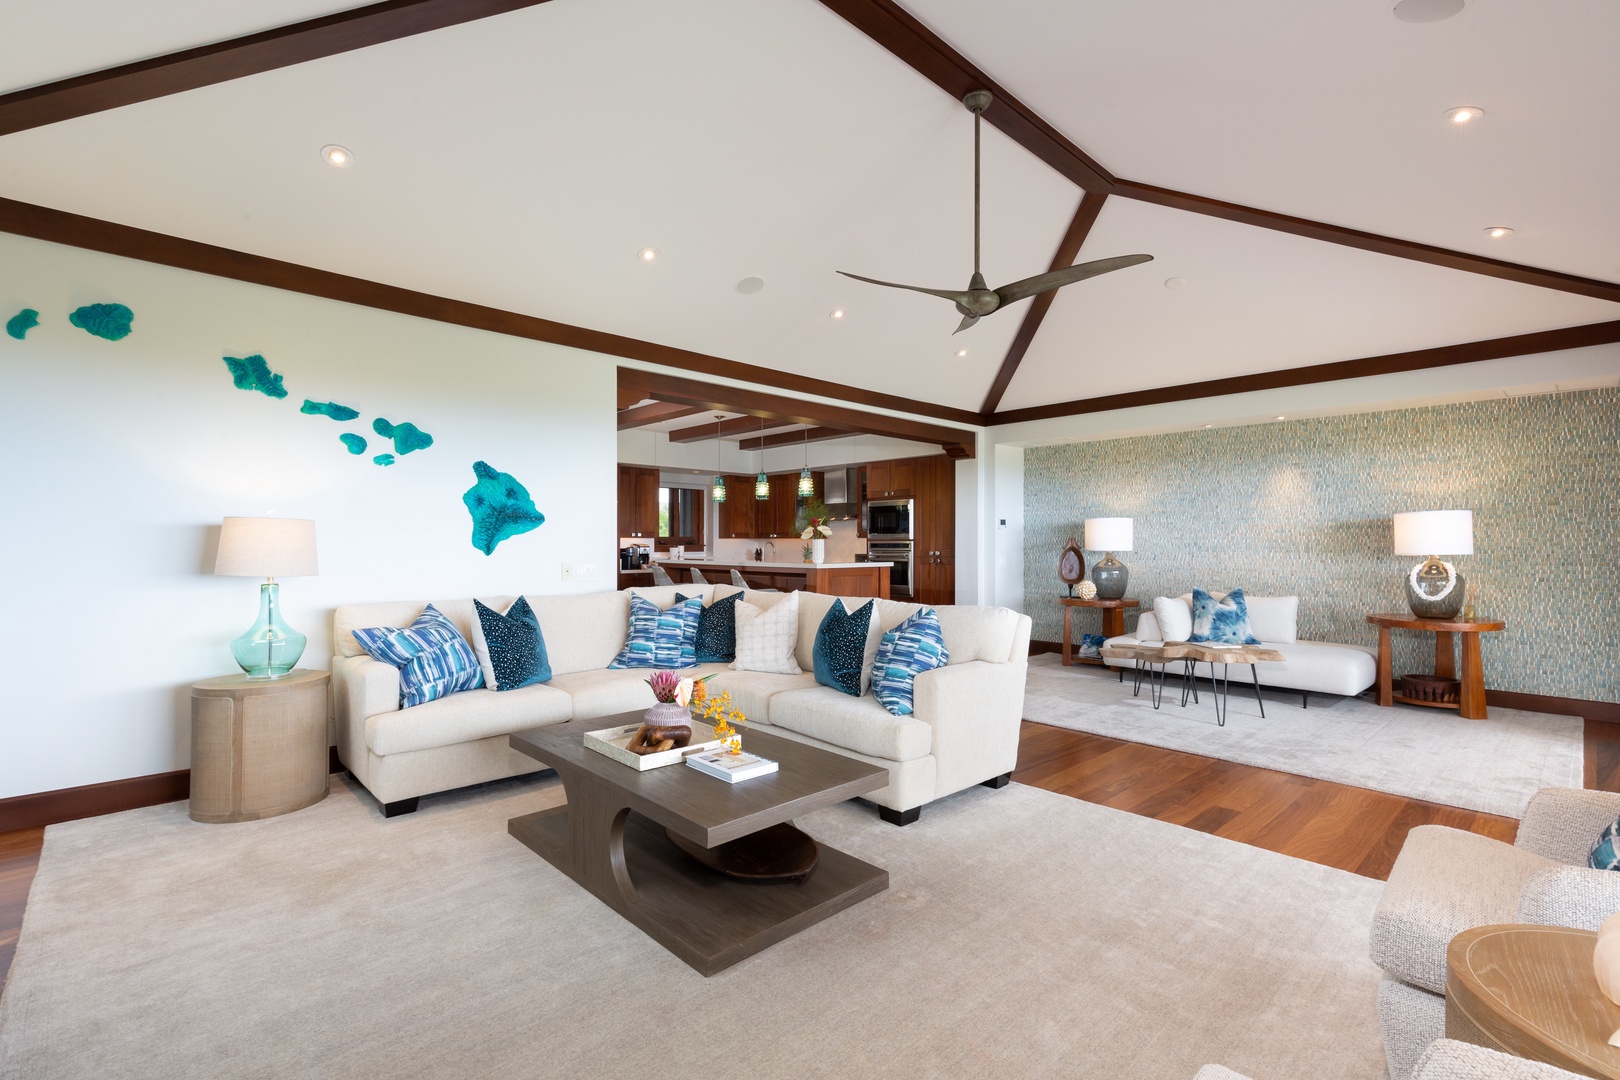 Kailua-Kona Vacation Rentals, 3BD Hali'ipua Villa (120) at Four Seasons Resort at Hualalai - Stunning great room with chic decor and vaulted ceilings